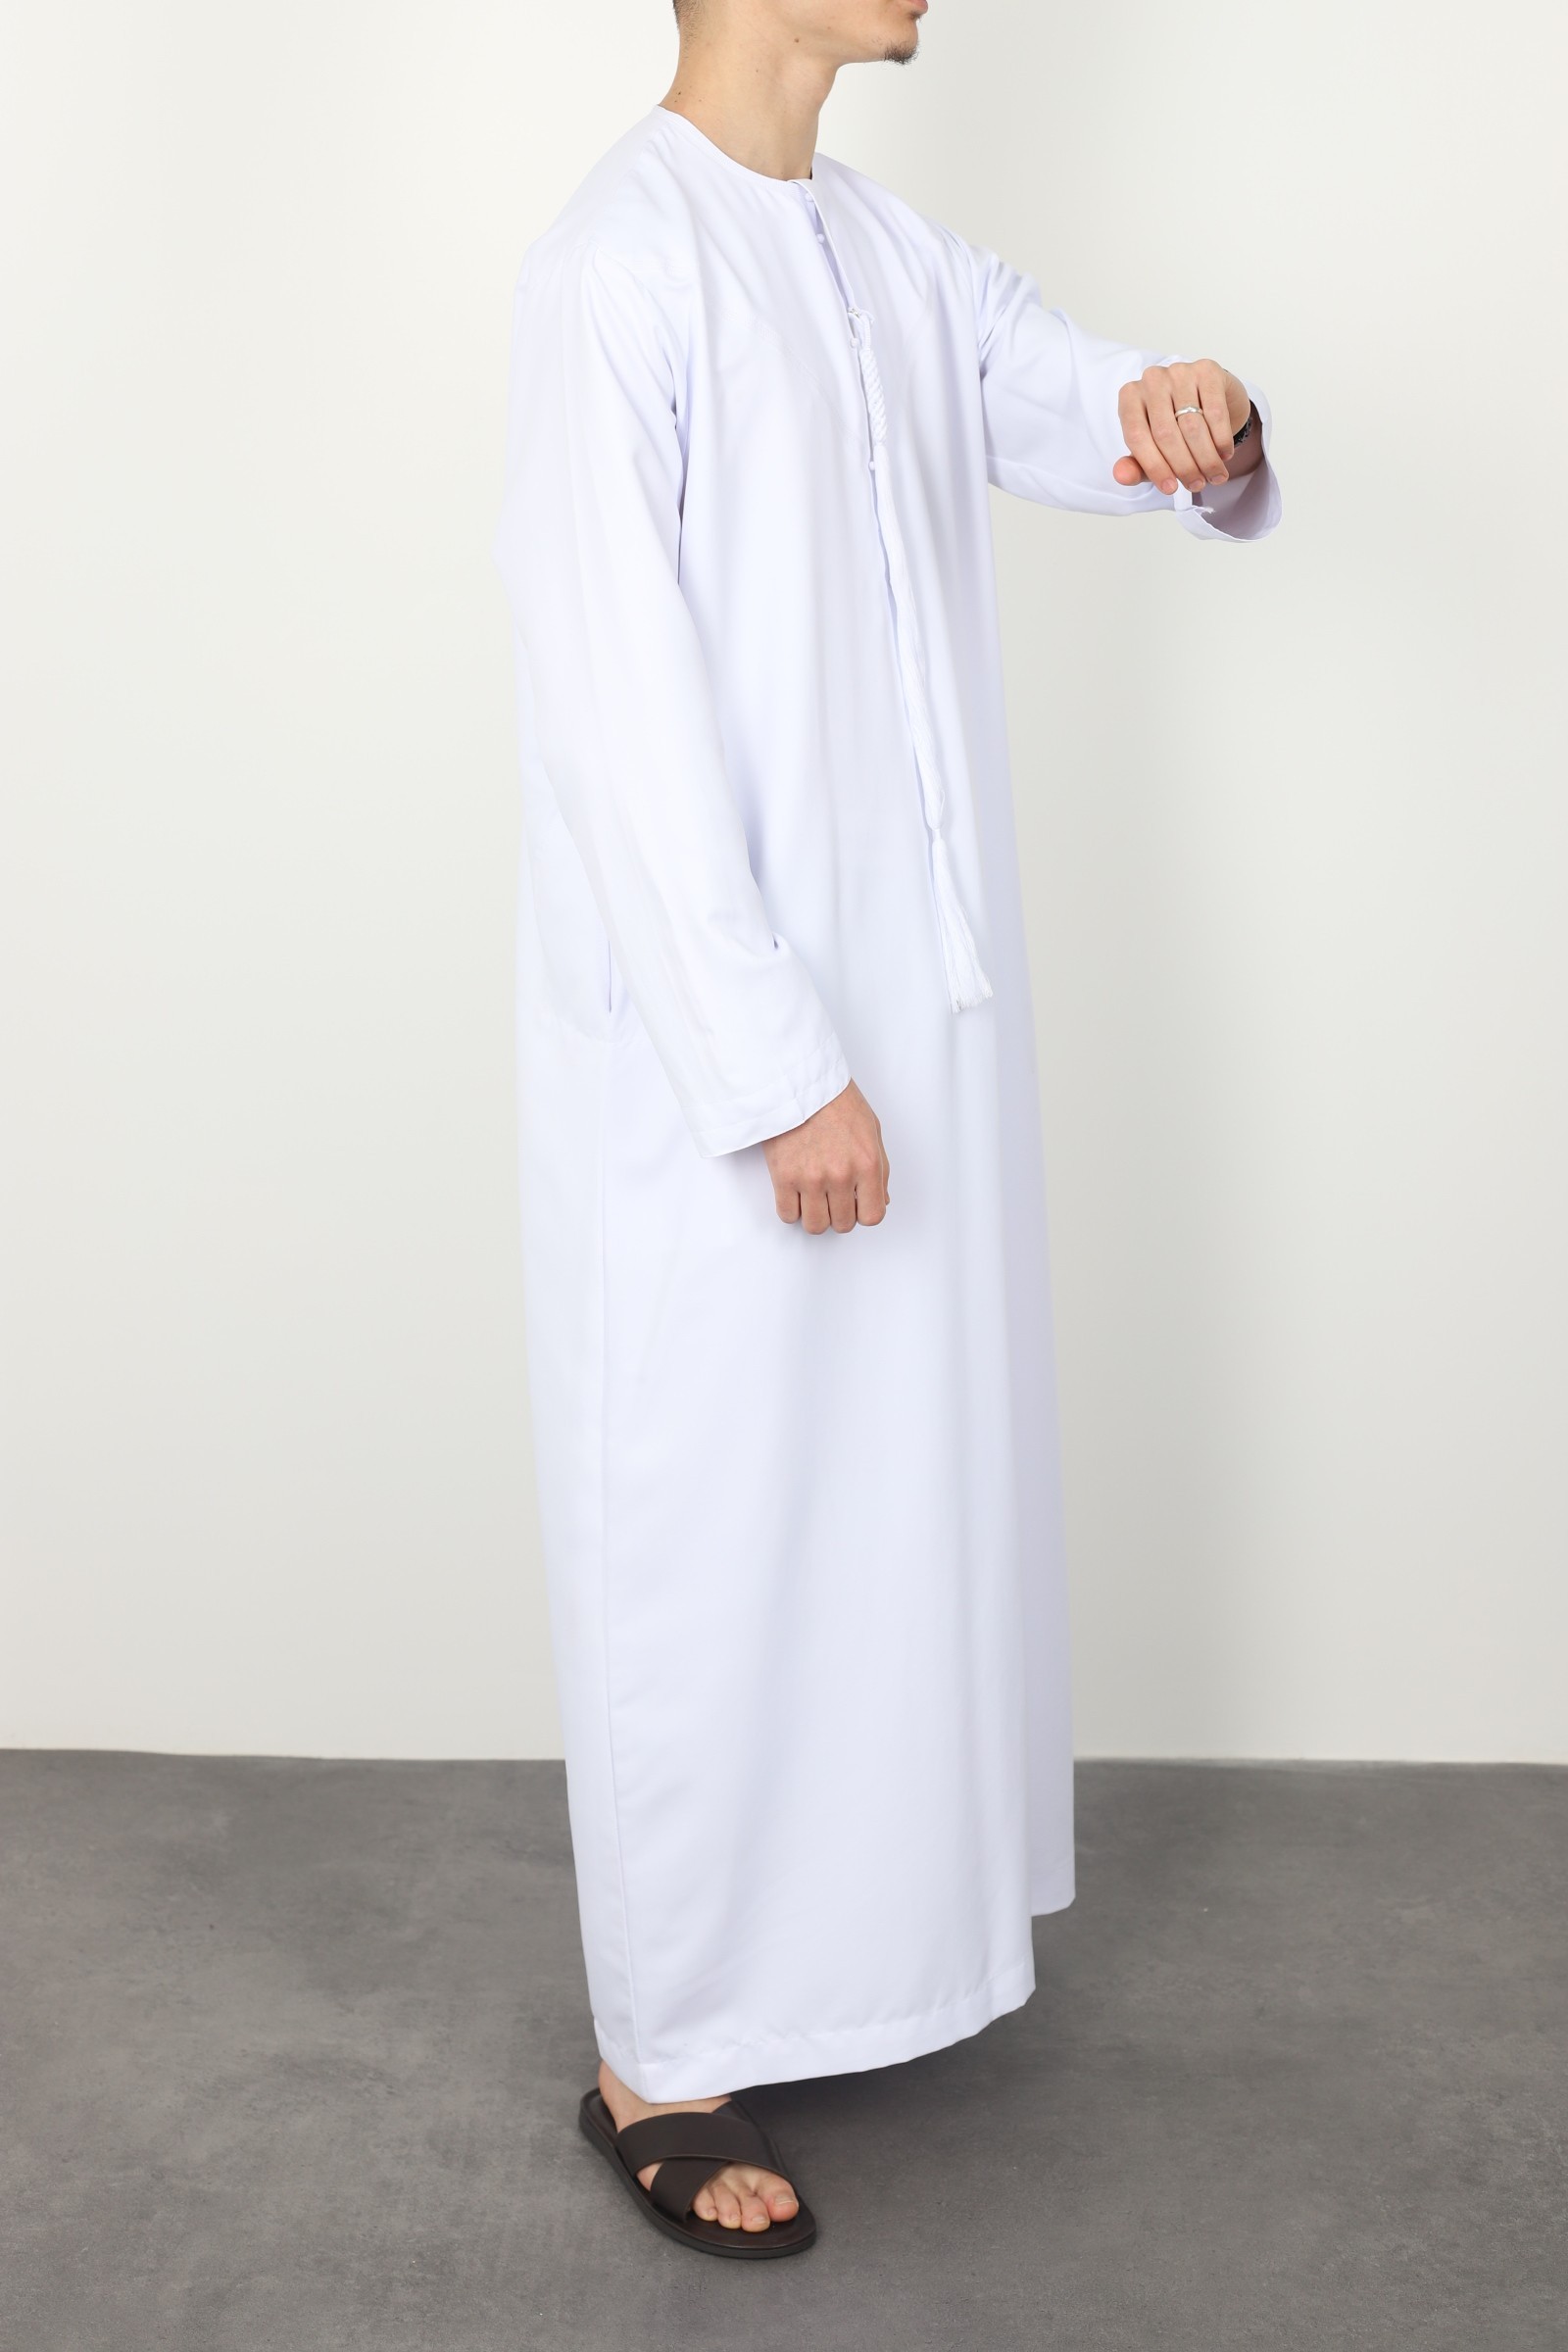 Qamis emirati white luxury high quality cheap jennah store